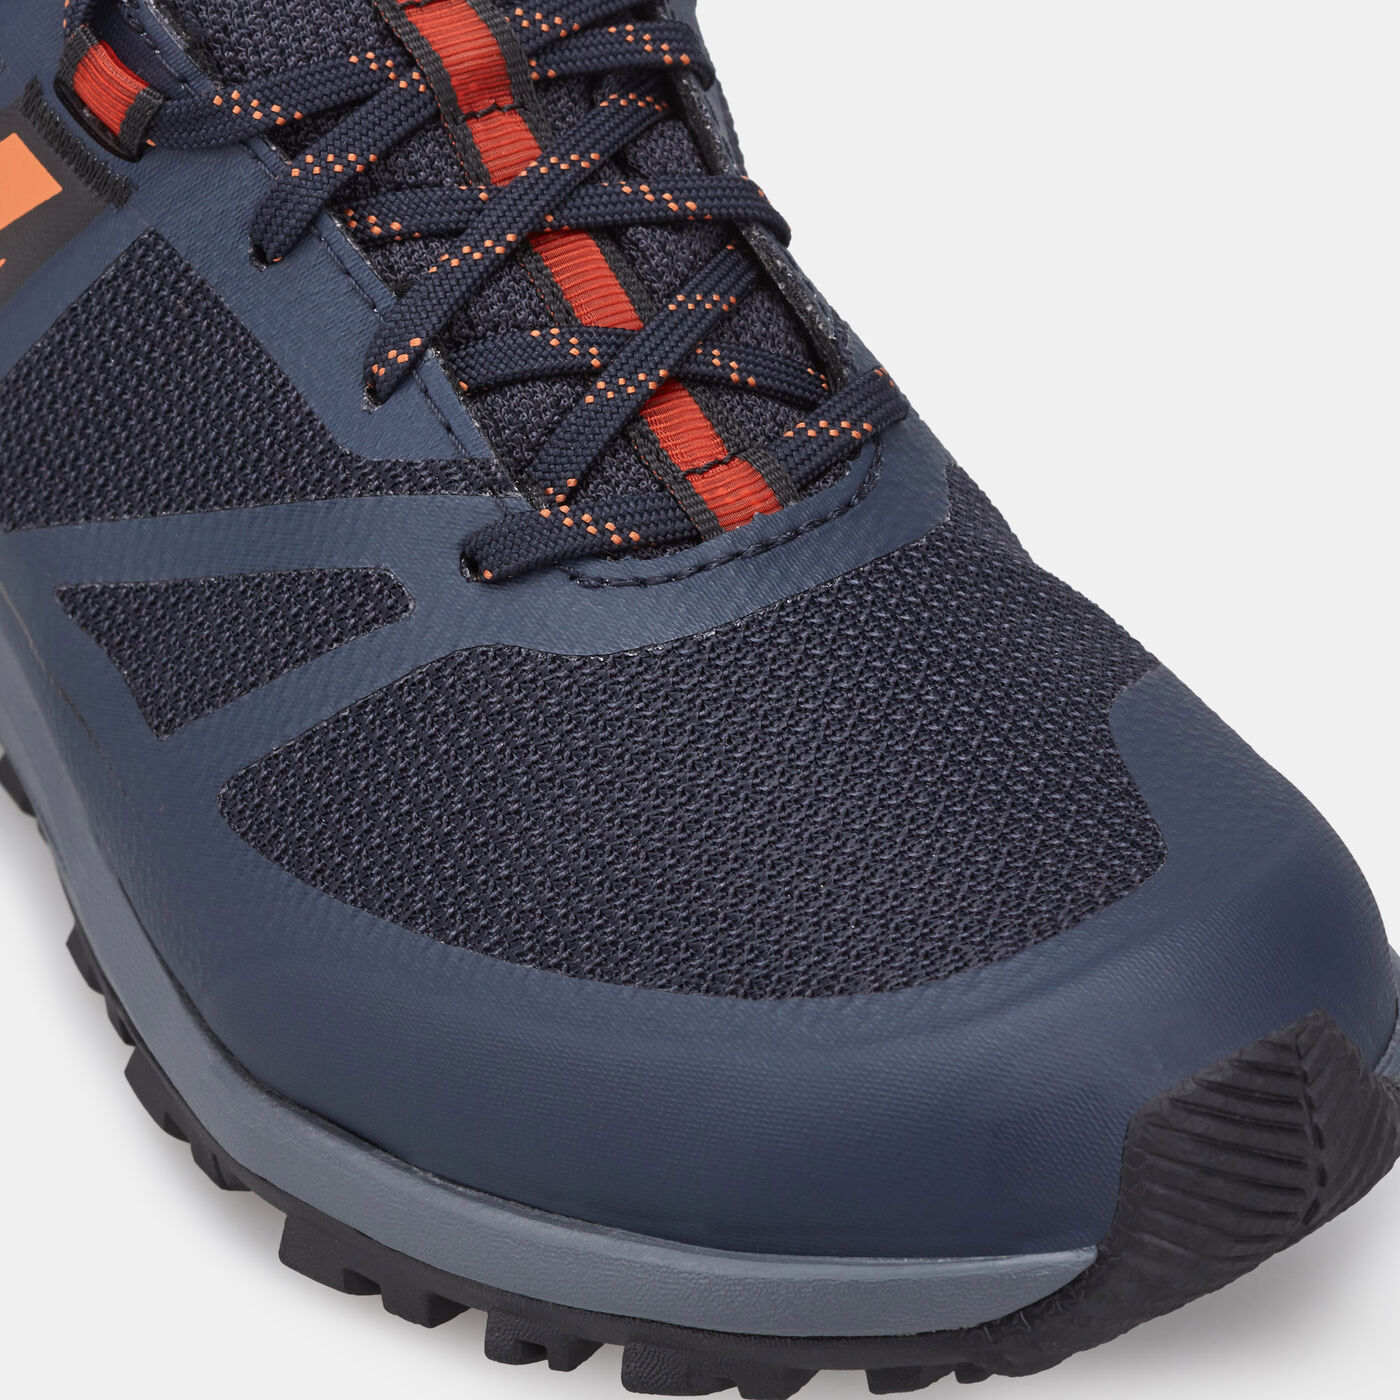 Men's Litewave Futurelight Hiking Shoe